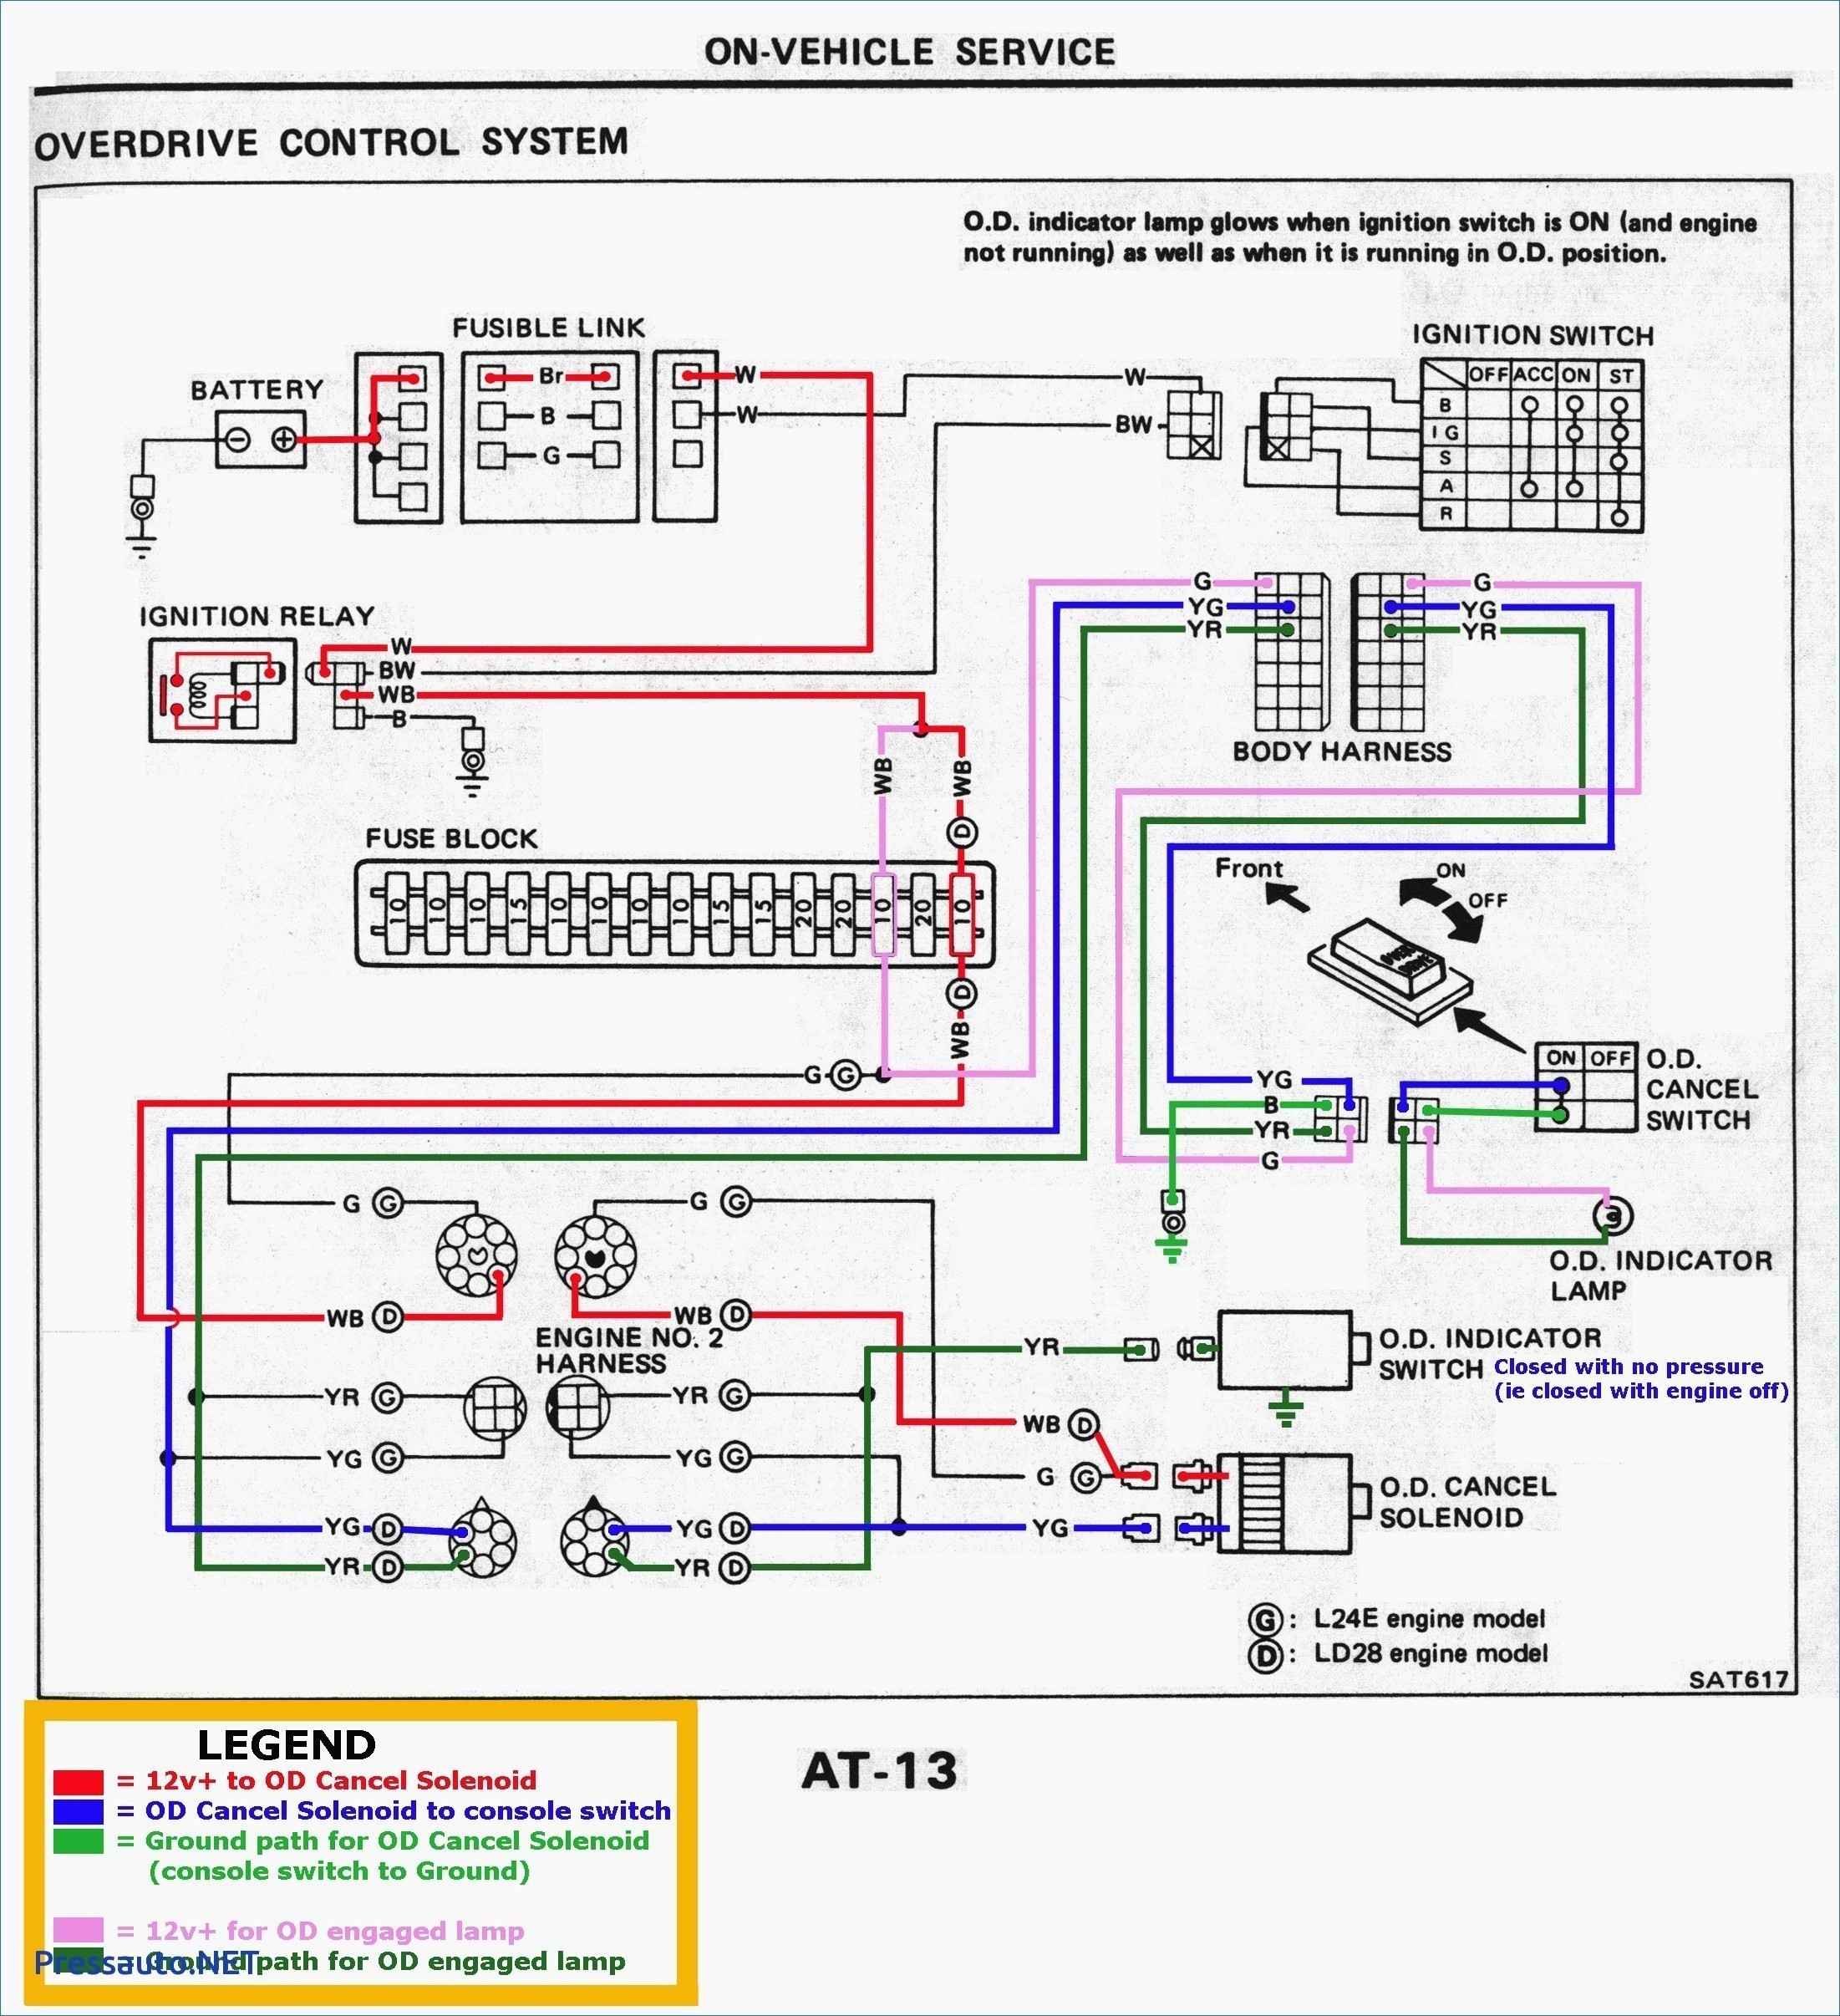 Diagram Of Car Electrical System Automotive Electrical Wiring Diagrams Electrical Circuit 2018 Wiring Of Diagram Of Car Electrical System